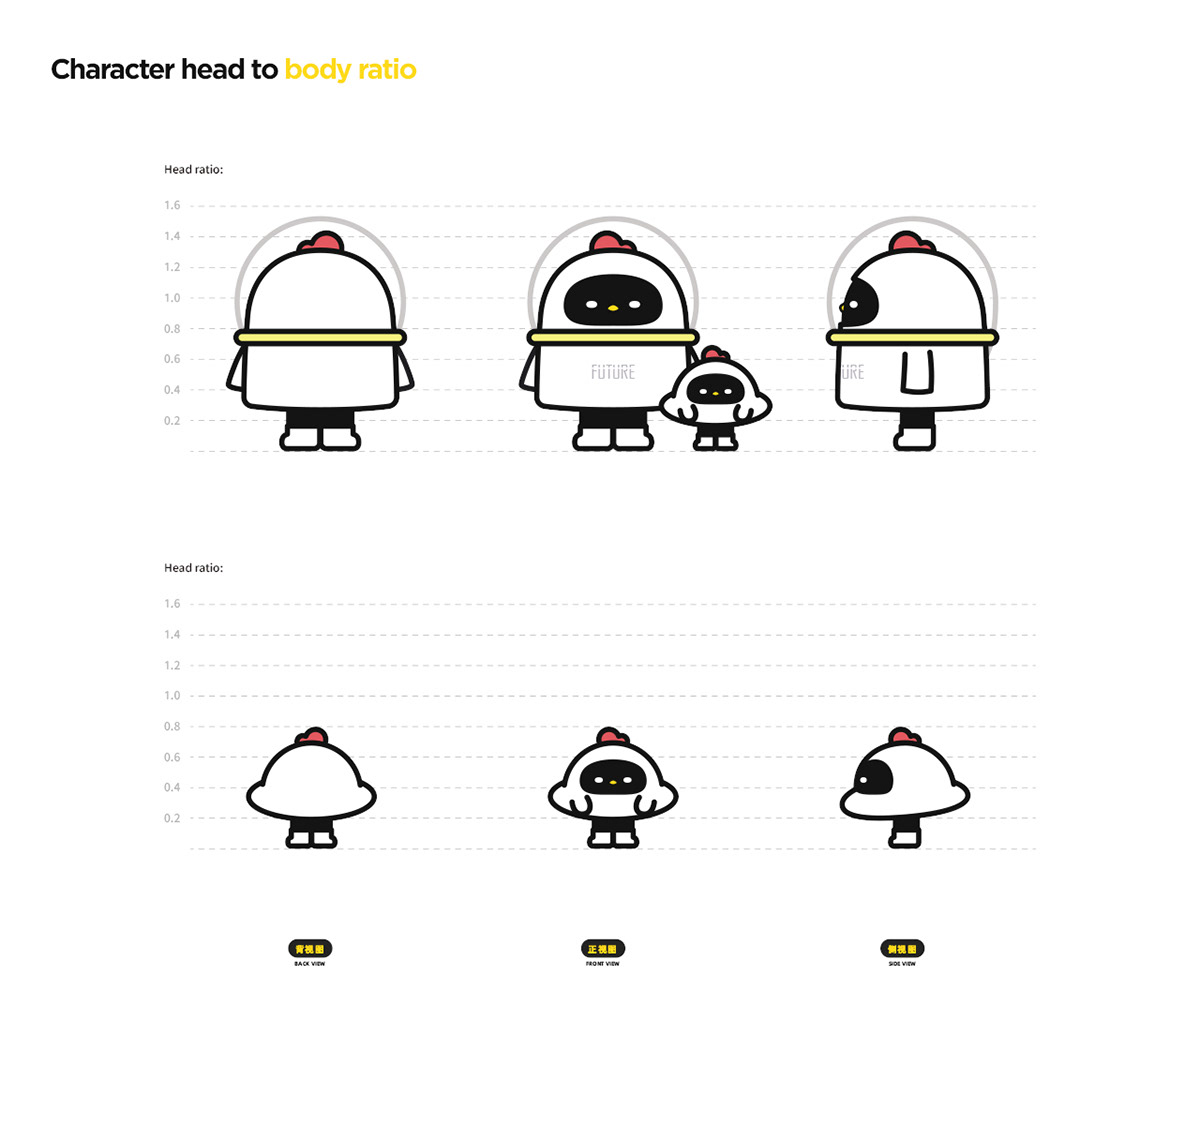 cartoon Drawing  Character design  chicken cute c4d 3D yellow Mascot family